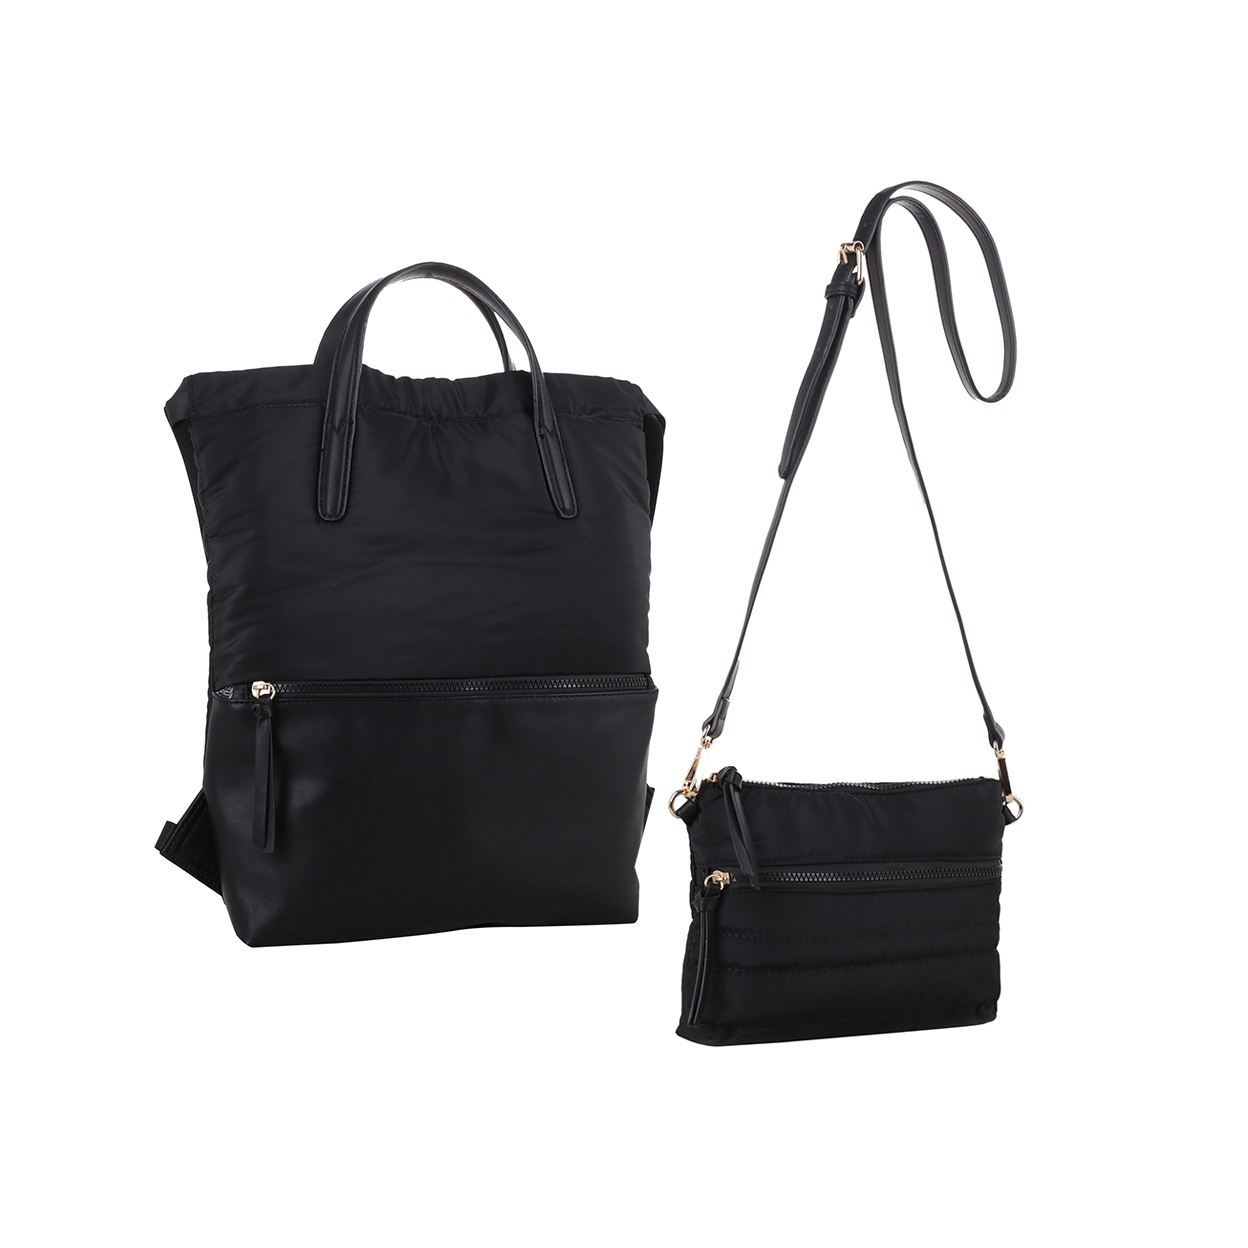 MKF Collection By Mia K. Buy Large Handbag, Get Crossbody Free - Taupe